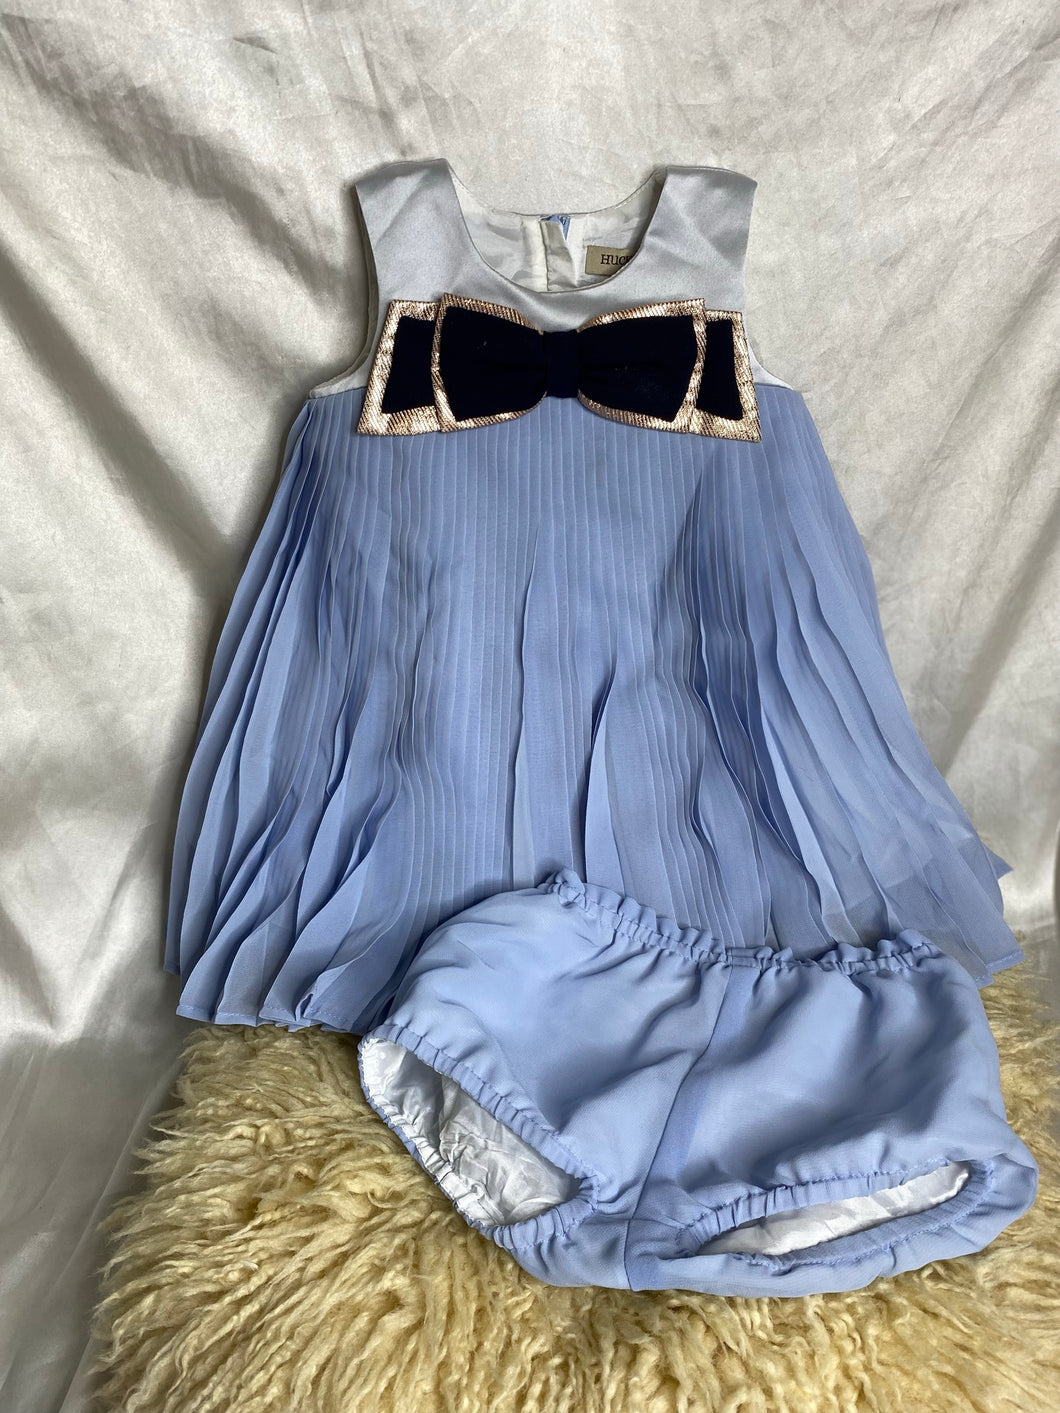 Huckabone Pleated Baby Blue puff Skirt Formal Dress with Pants set - Girls 12 months